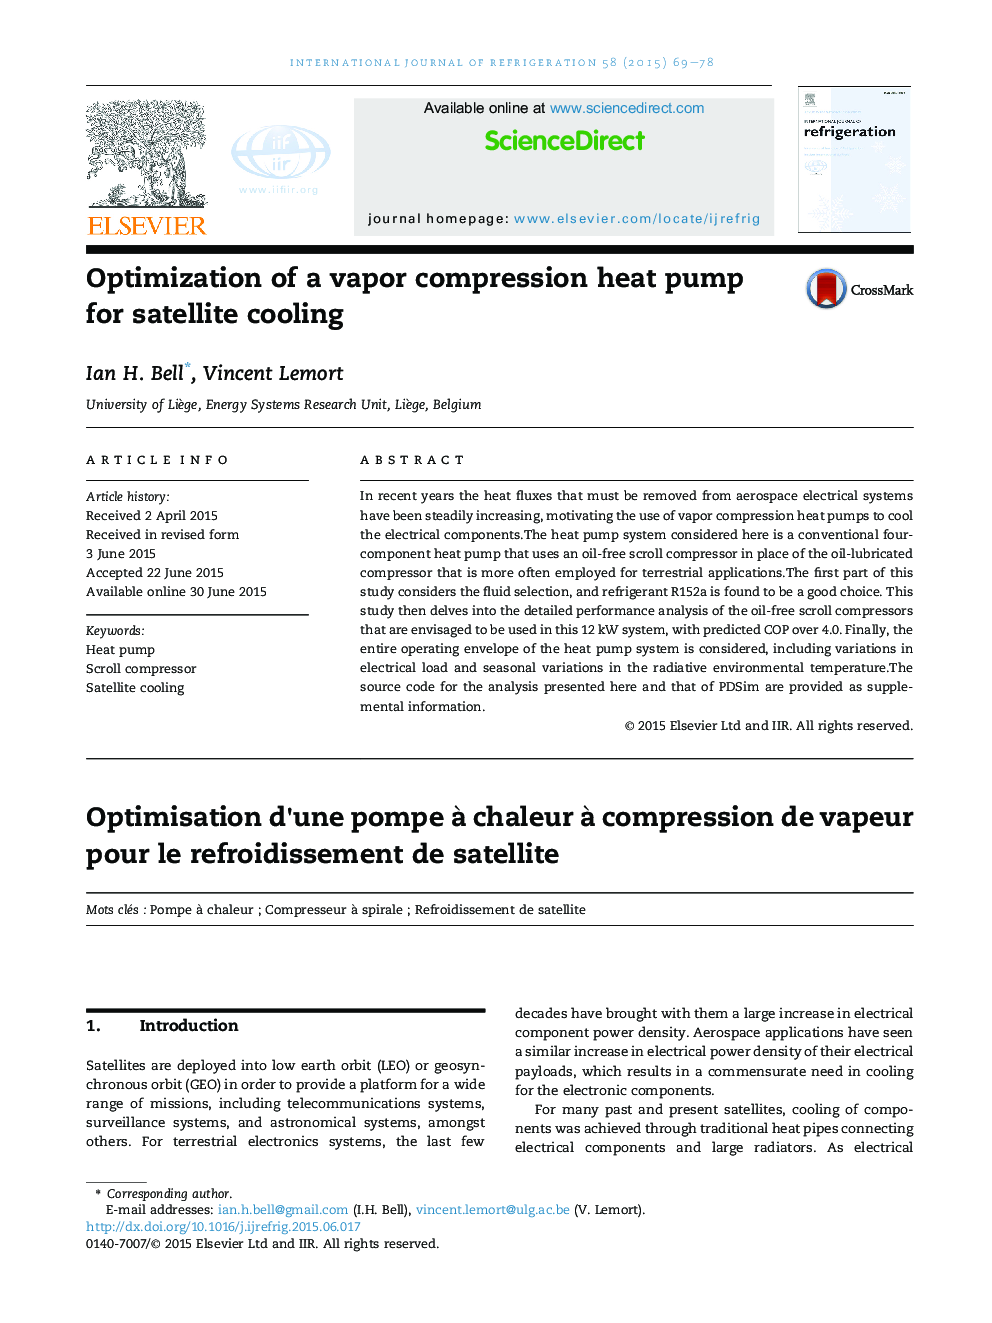 Optimization of a vapor compression heat pump for satellite cooling